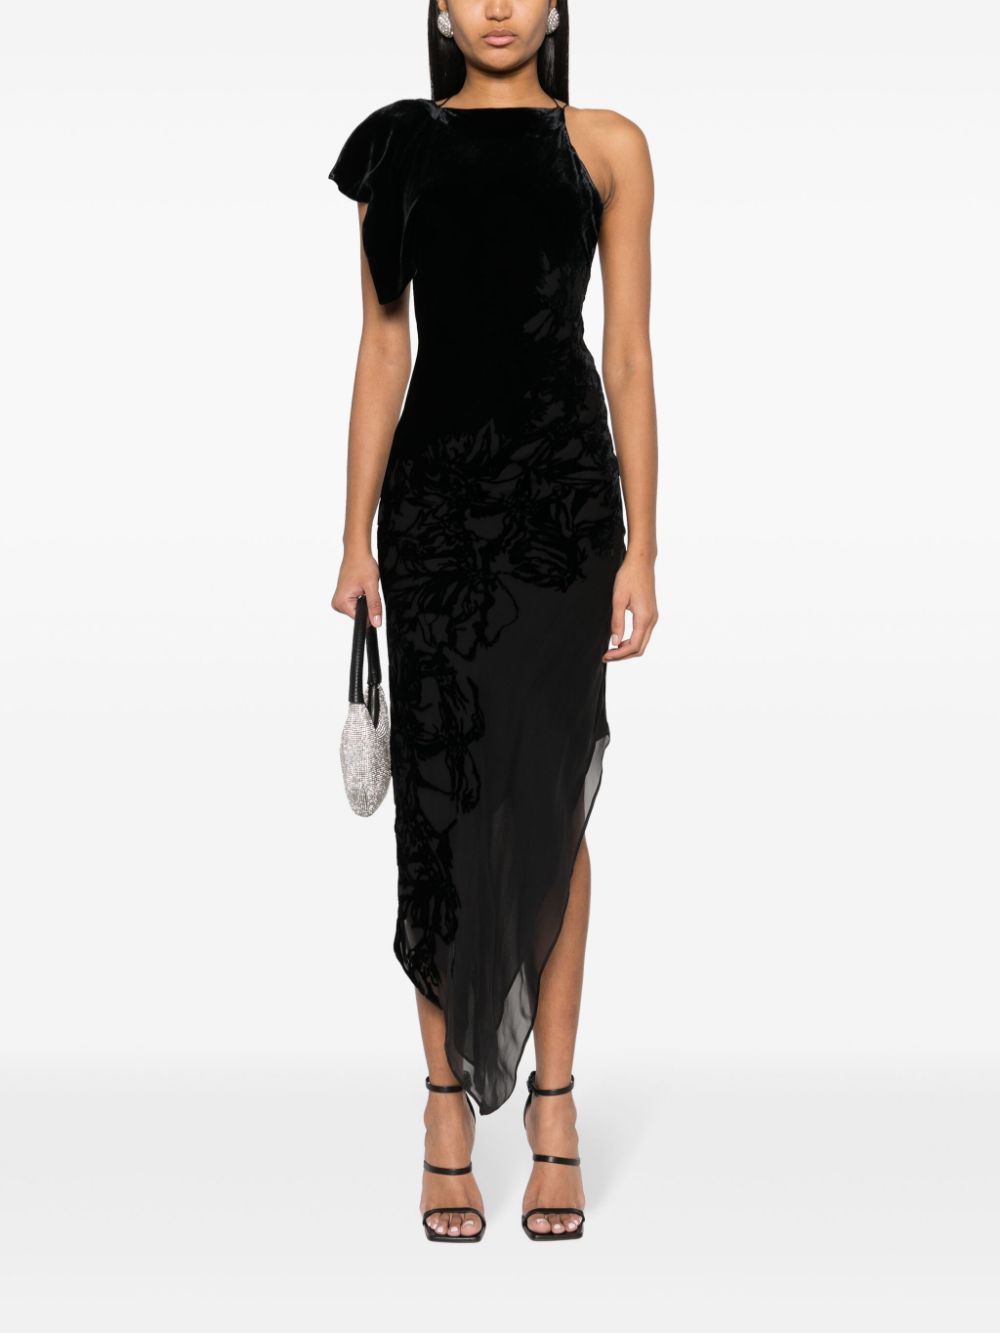 REV Asymmetrische jurk - Zwart